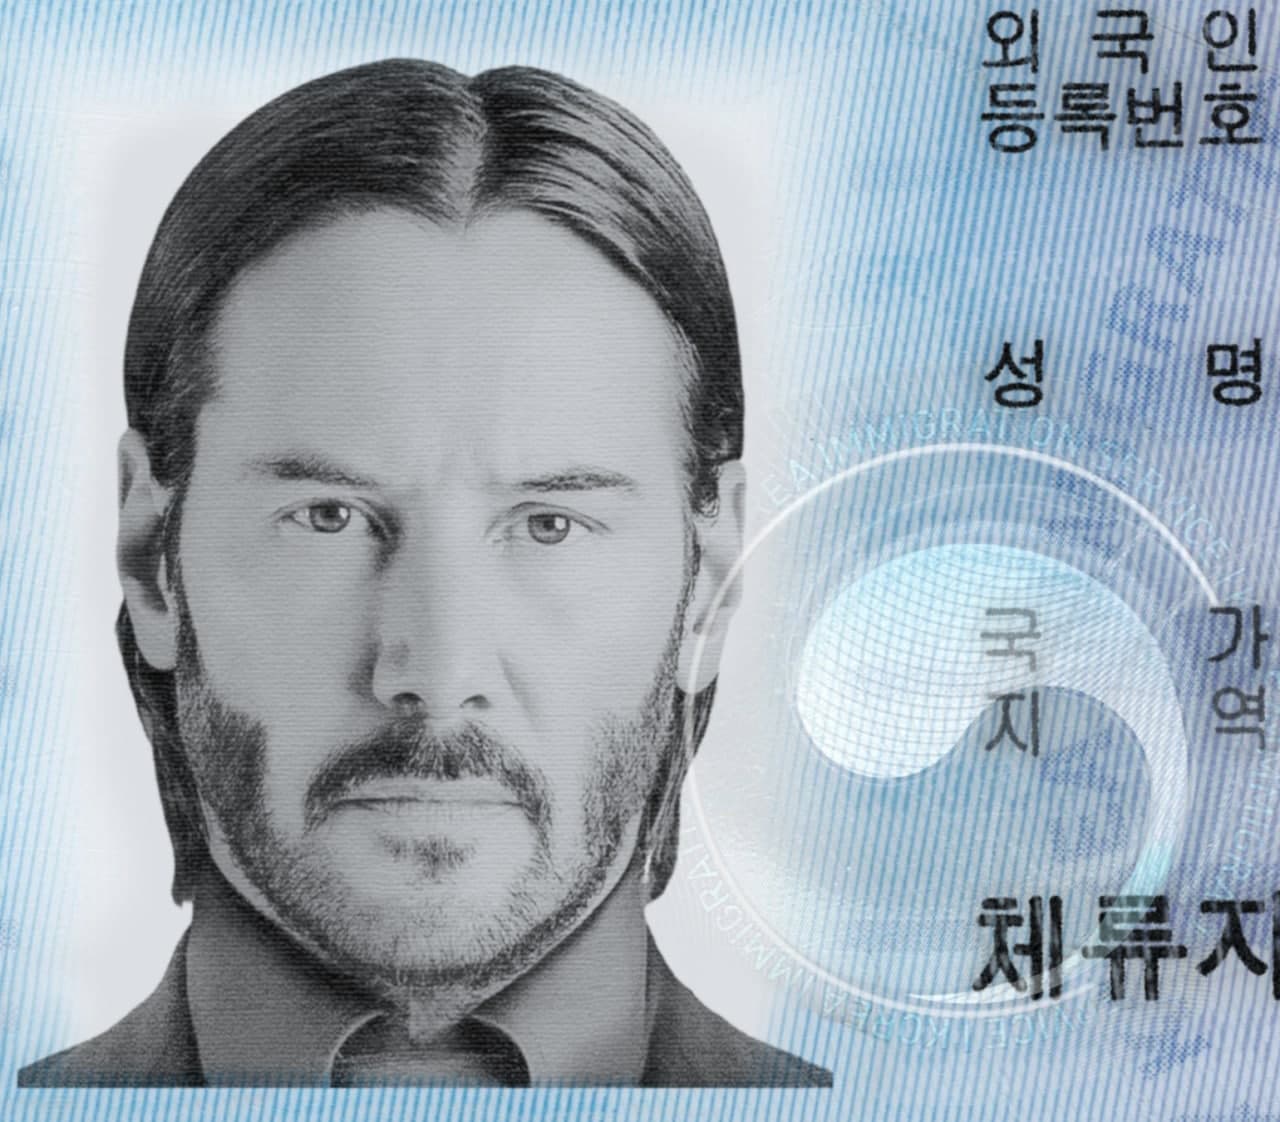 Korea ID-2